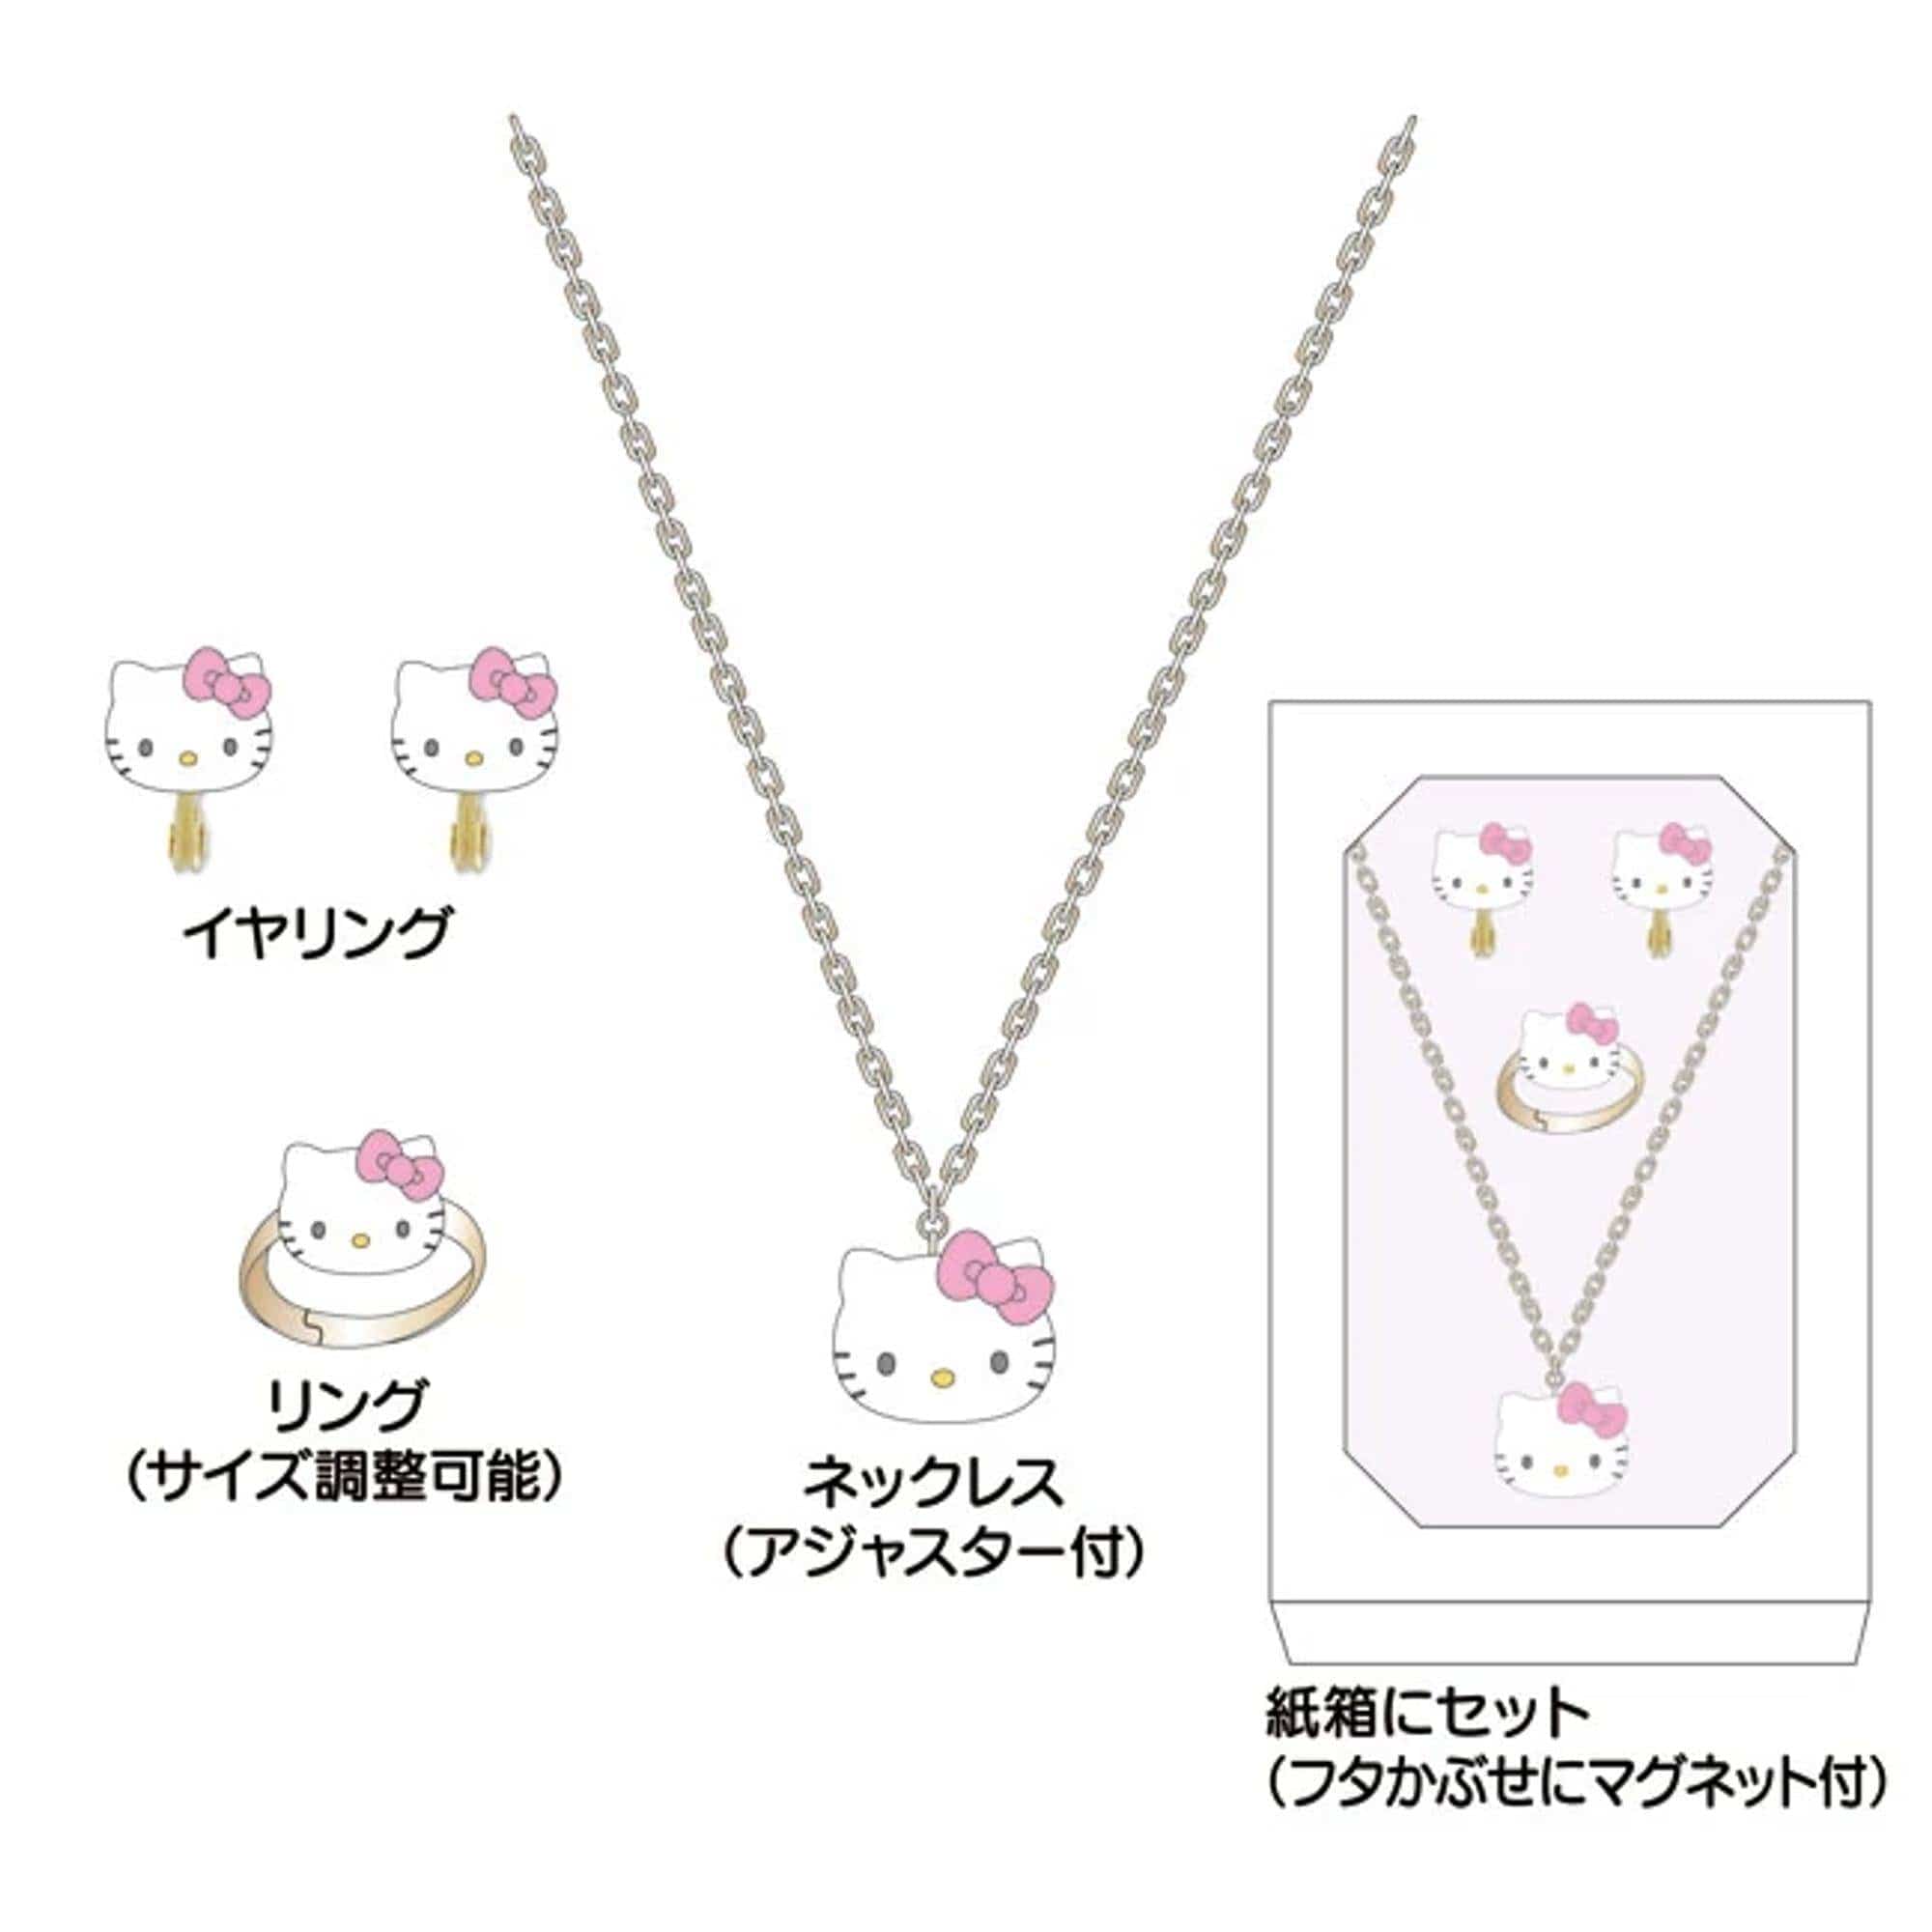 Enesco Sanrio Friends Jewelry Sets: Necklace, Earrings, Ring Hello Kitty Kawaii Gifts 4550337377390